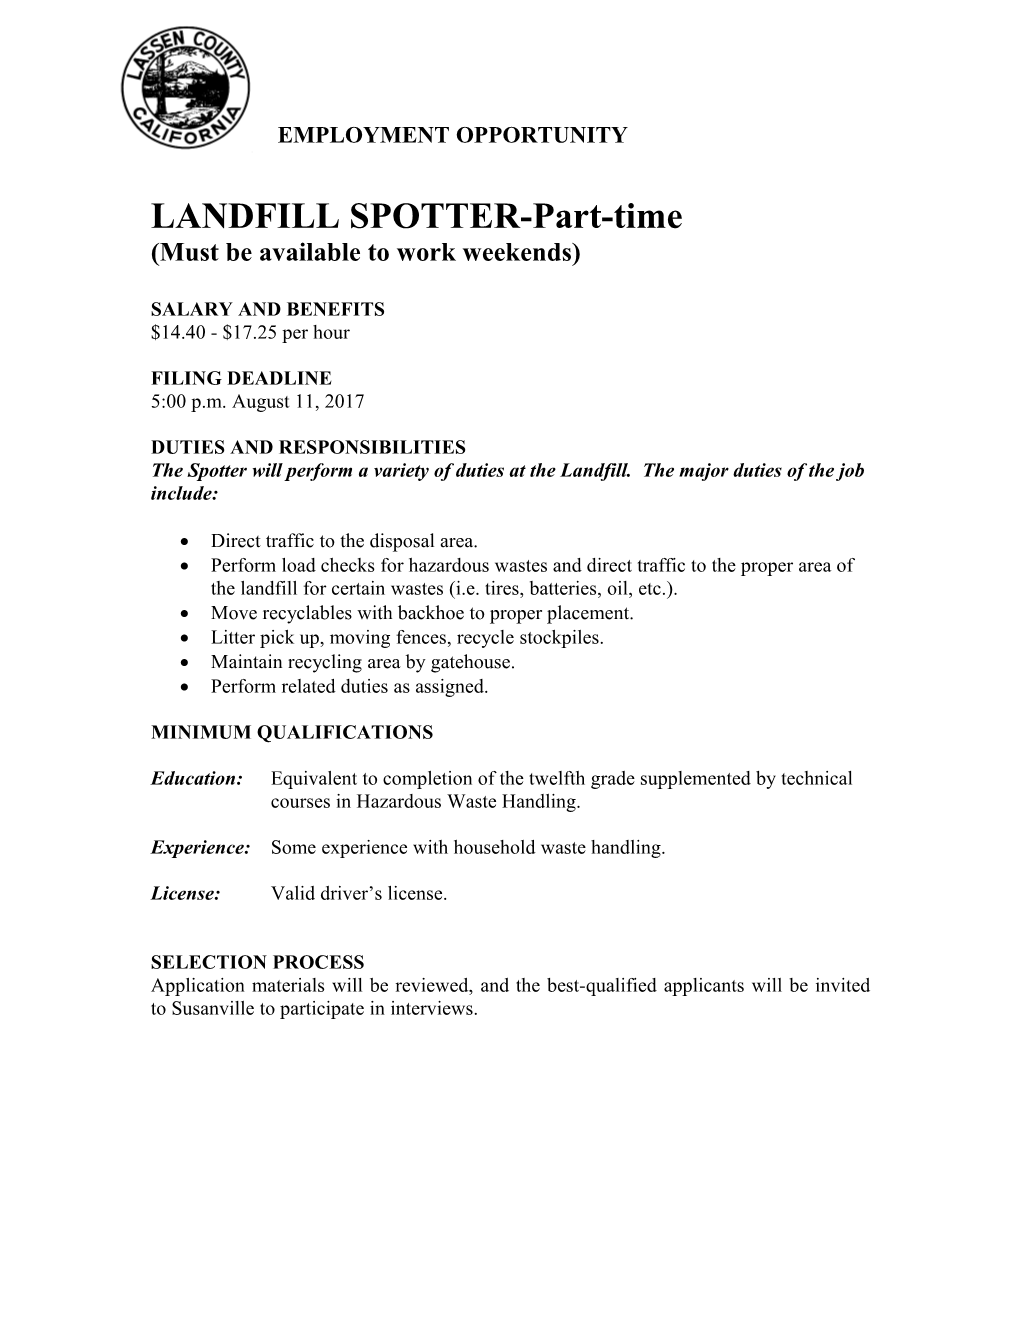 LANDFILL SPOTTER-Part-Time